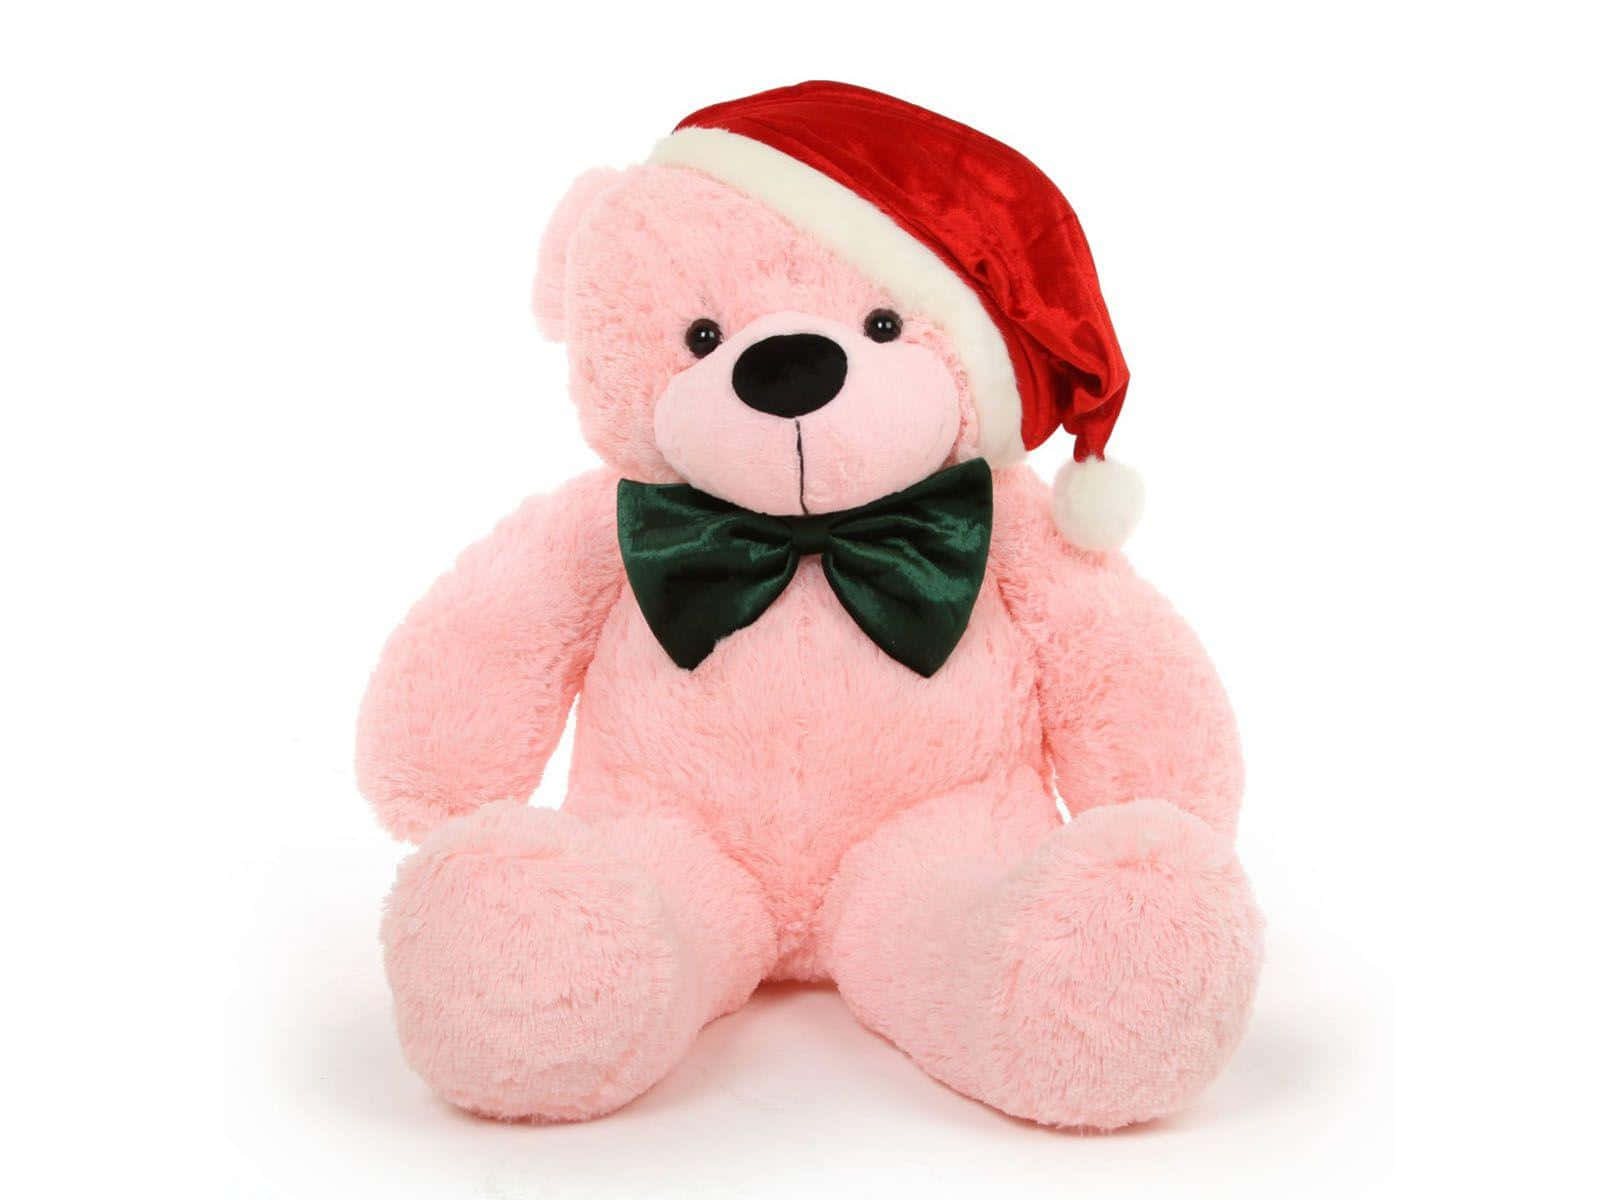 Adorable Pink Teddy Bear Festively Adorned For Christmas